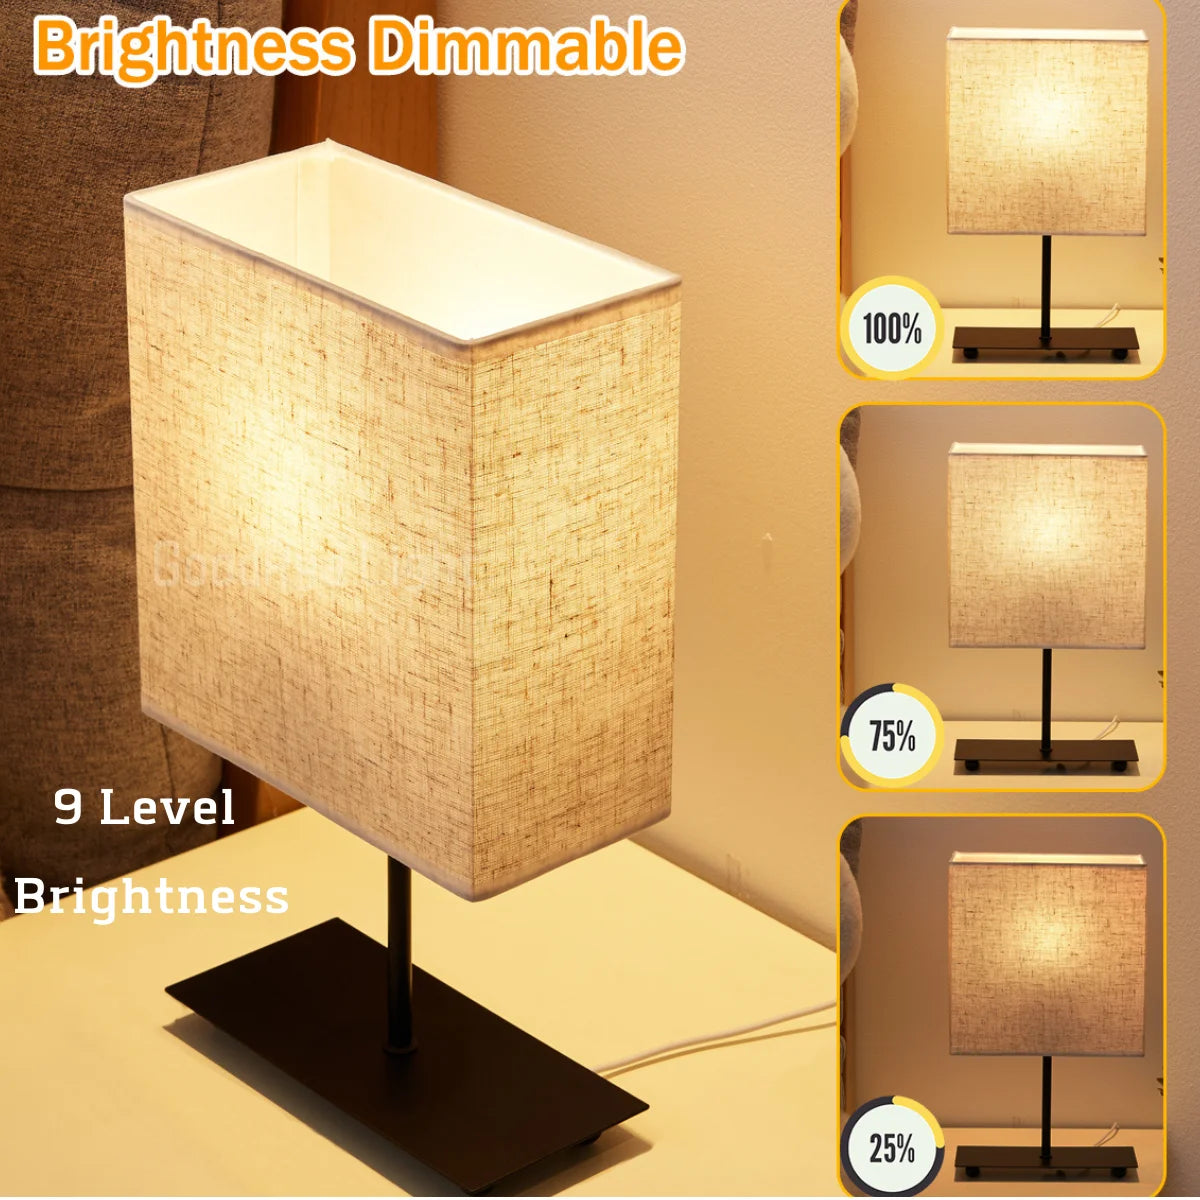 Room Home Decor LED Rectangular Nightstand Lighting Table Lamp USB Plug With Cord Infinitely Dimmable Bedroom Table Night Lights